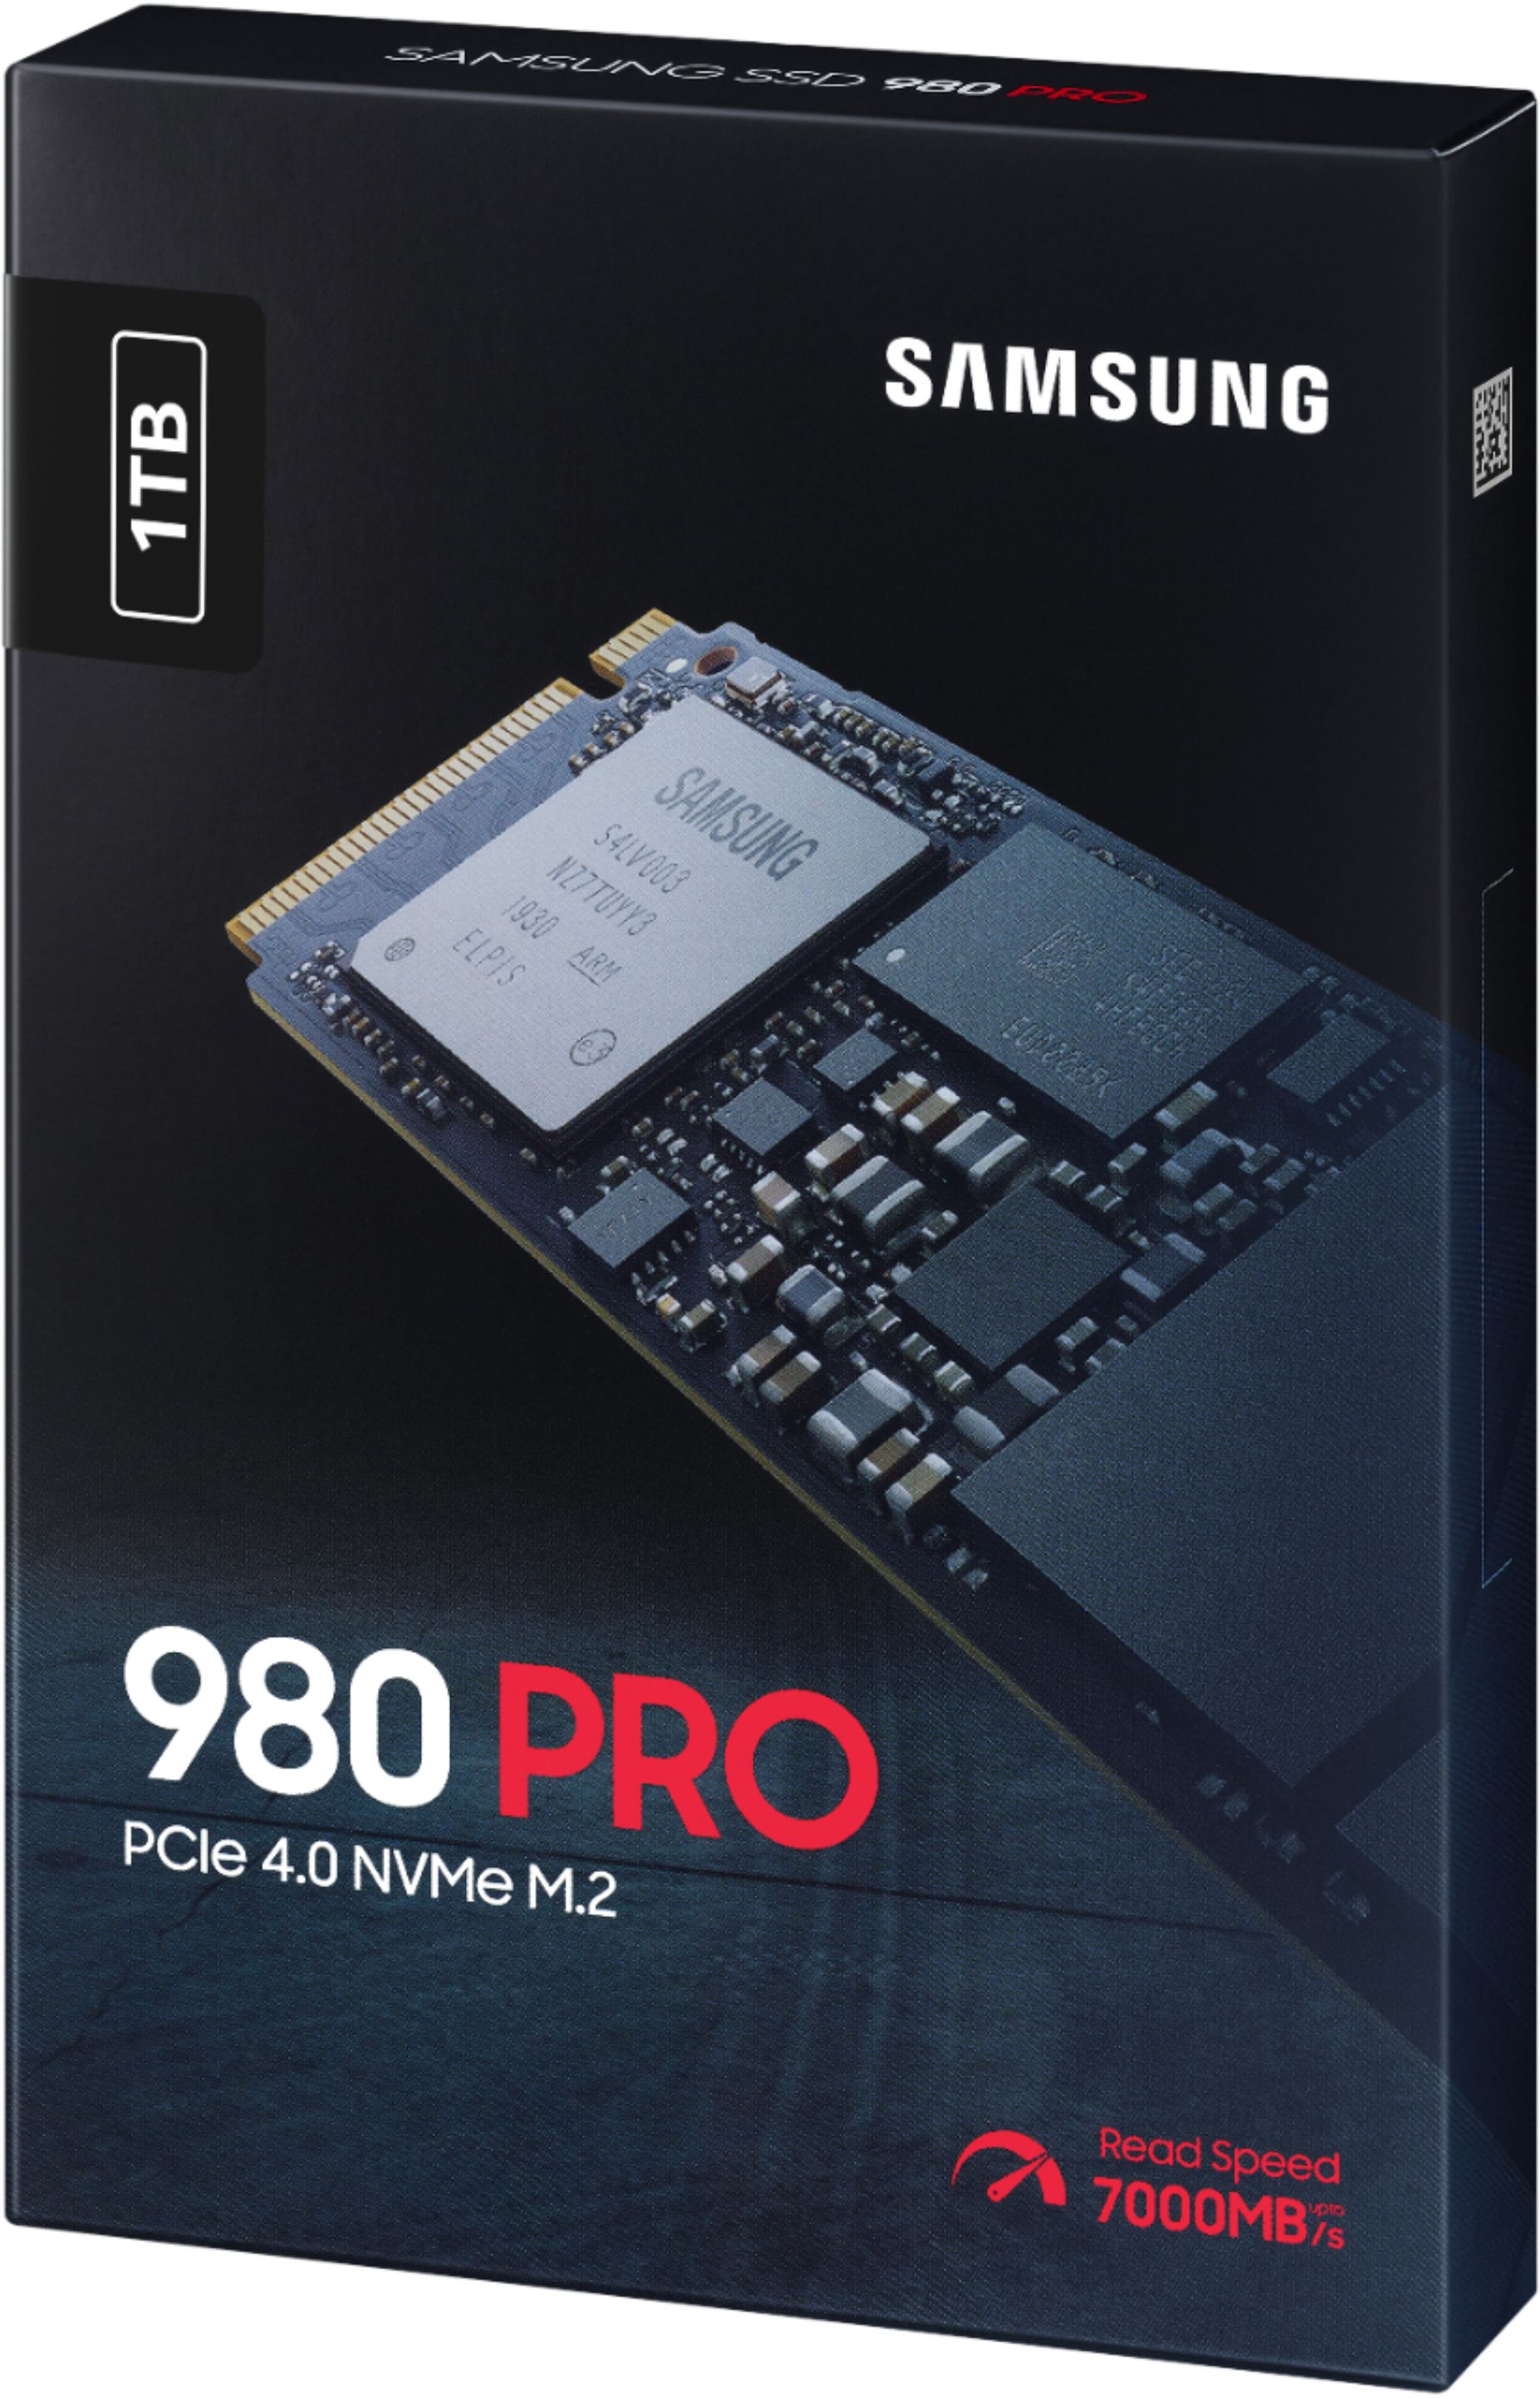 Best Buy - Samsung 980 PRO 1TB Internal NVMe SSD $199.99 ($30 off)